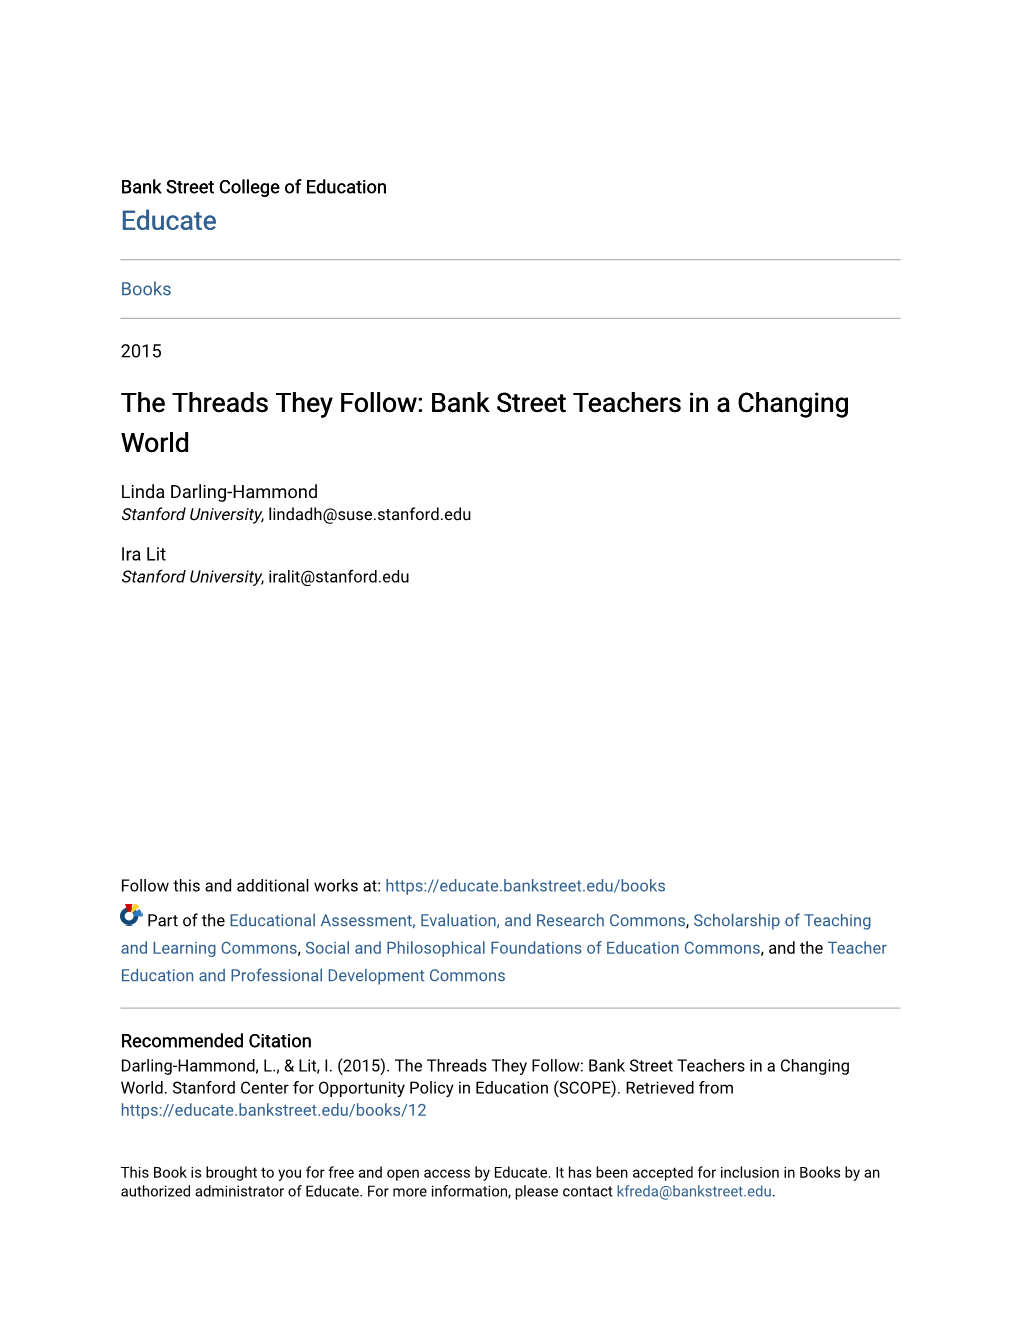 Bank Street Teachers in a Changing World